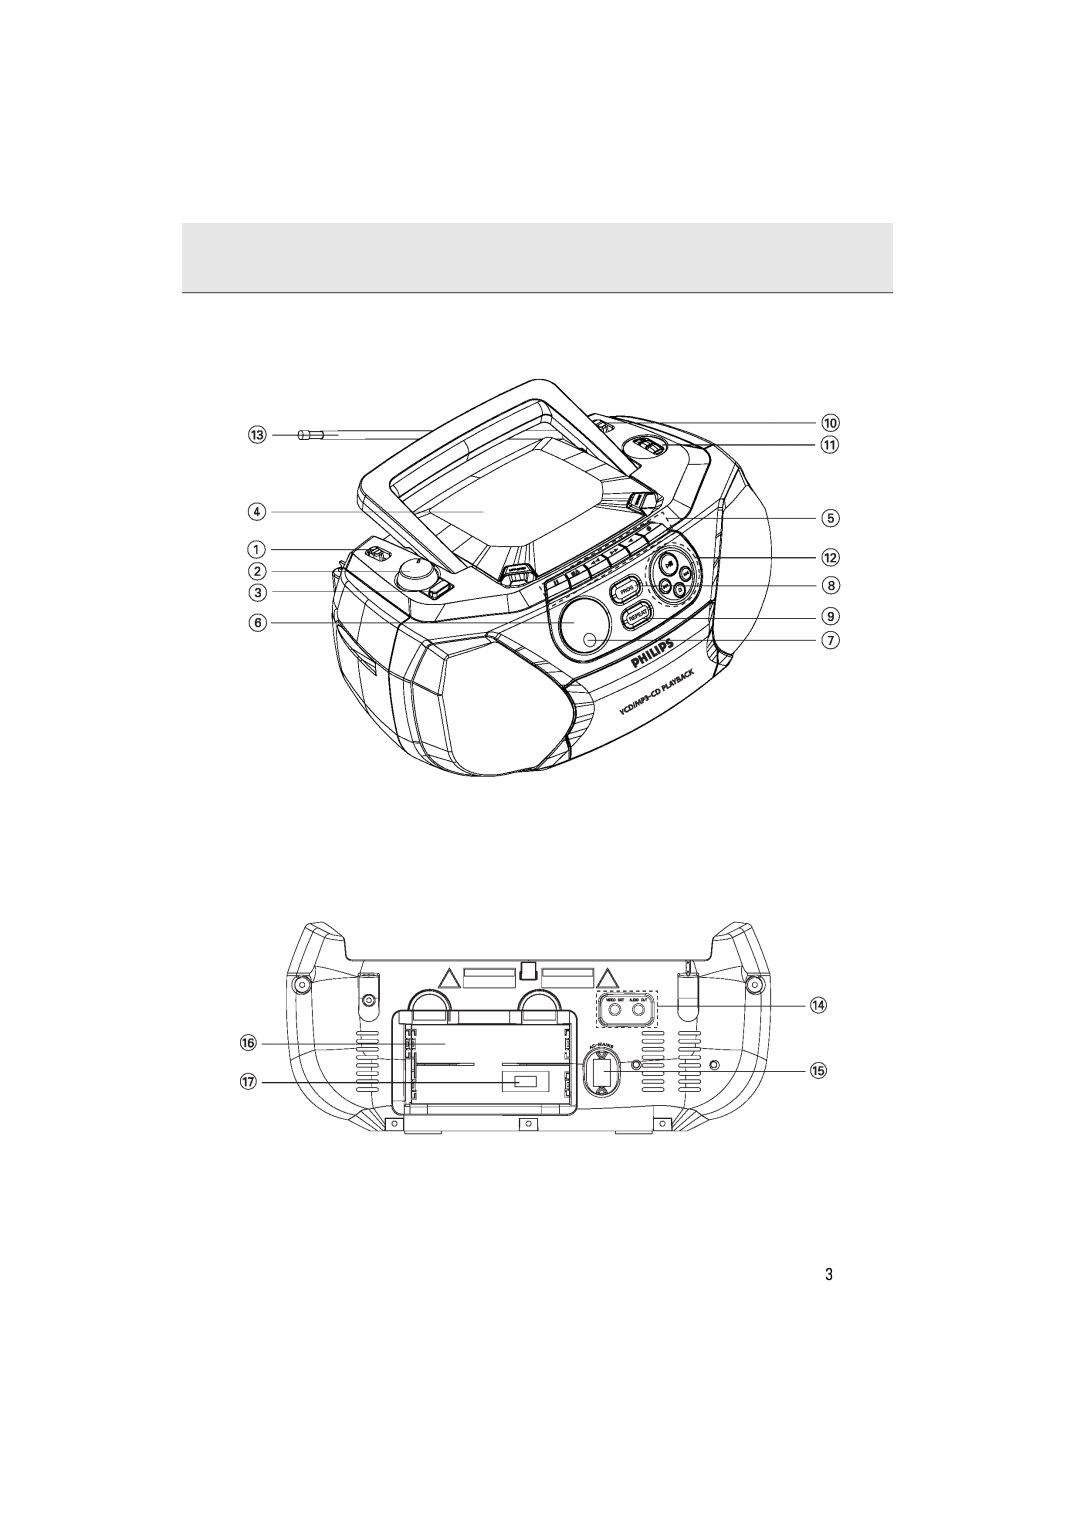 Philips AZ5160 user manual # 4, 5 @ 